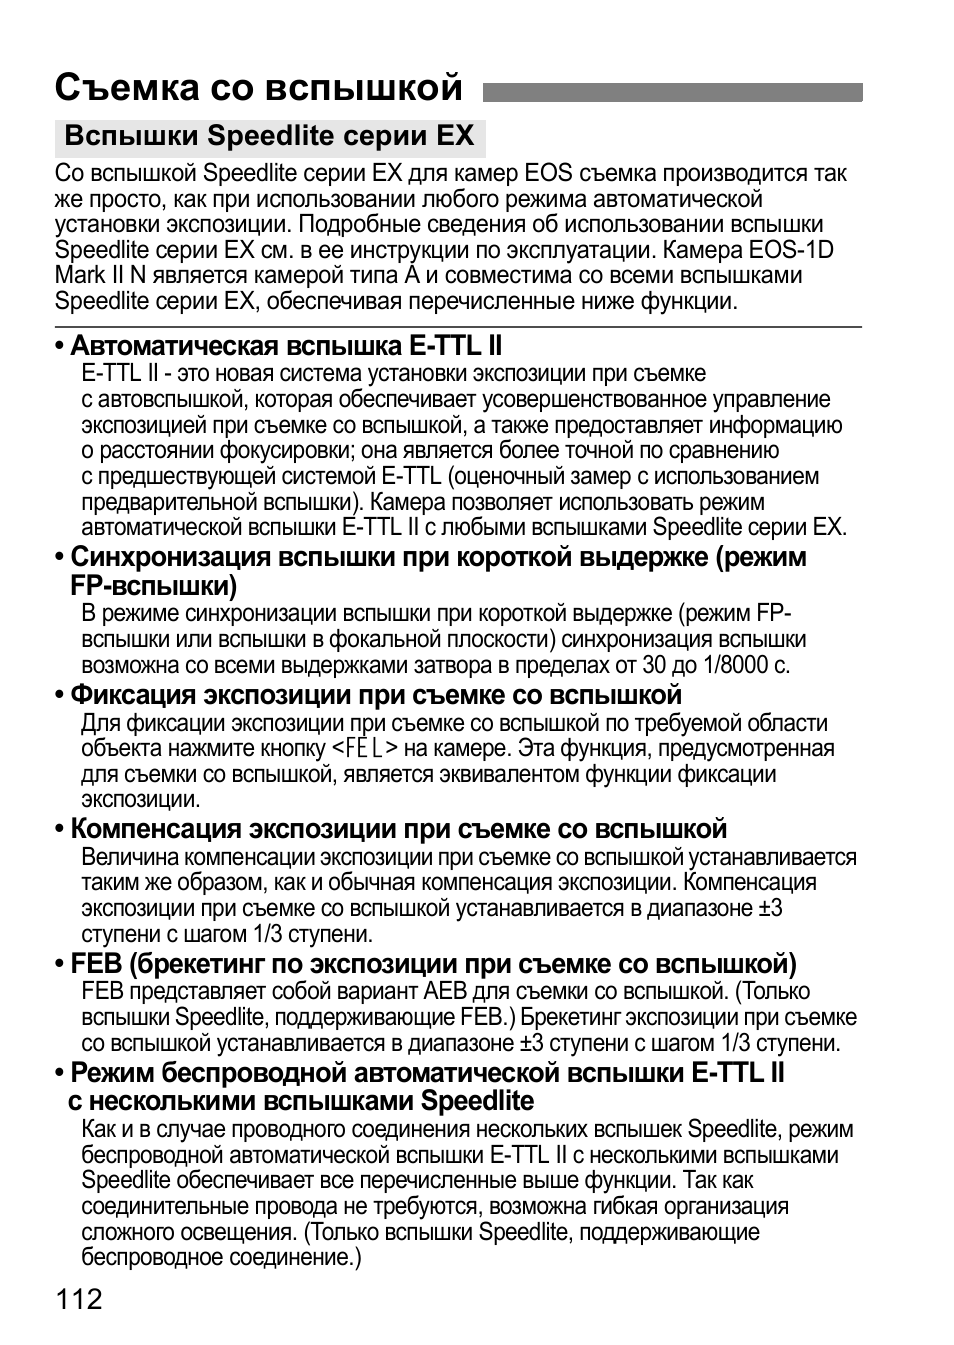 Съемка со вспышкой | Инструкция по эксплуатации Canon EOS 1D Mark II N | Страница 112 / 196